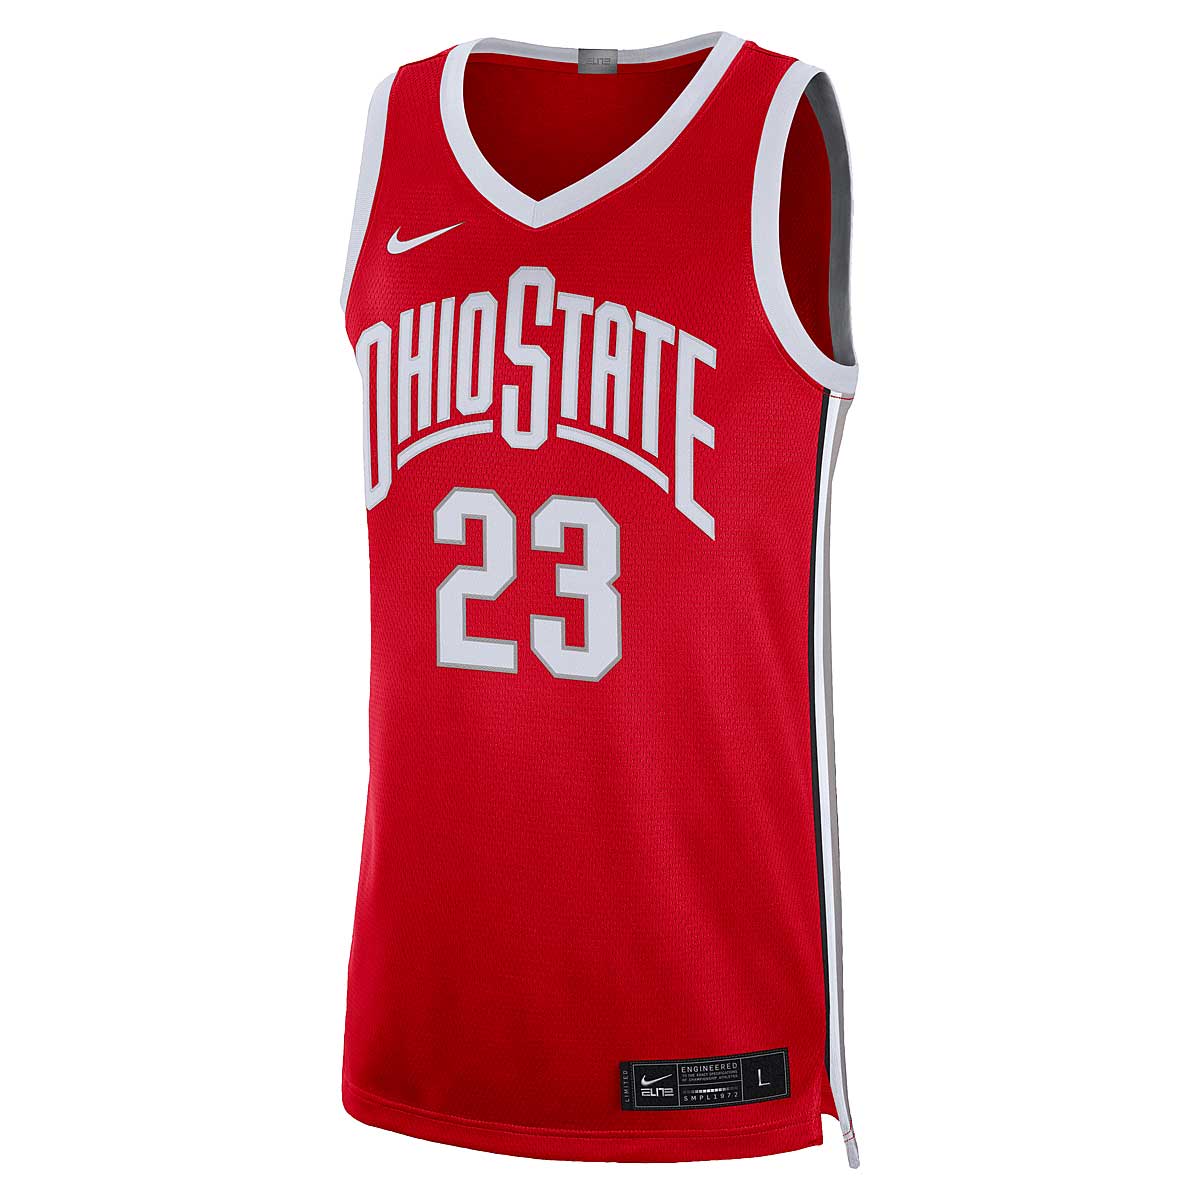 Nike Ncaa Ohio State Buckeyes Dri-fit Swingman Jersey Lebron James, University Rot/weiß XL